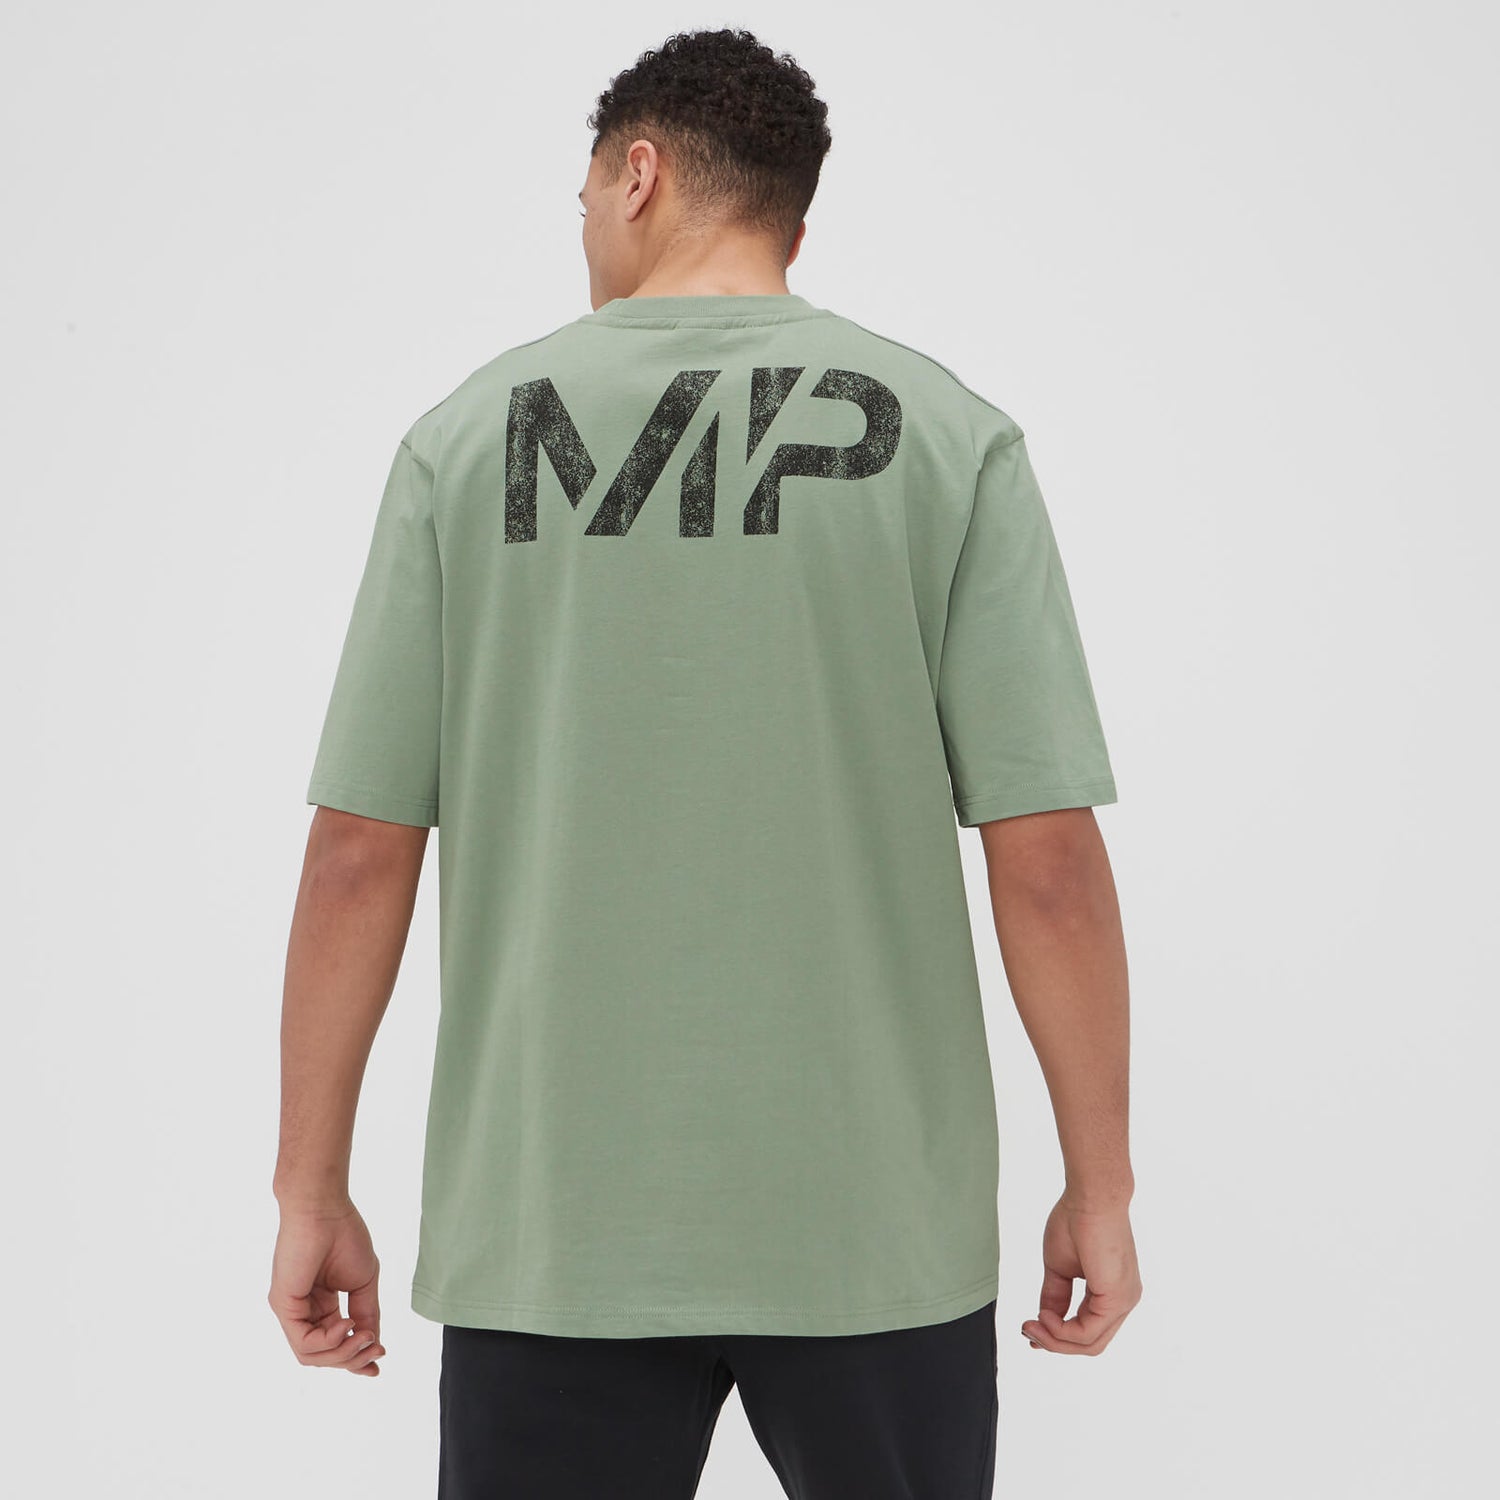 MP Herren Grit-Grafik-T-Shirt mit Oversize-Passform – Washed Jade